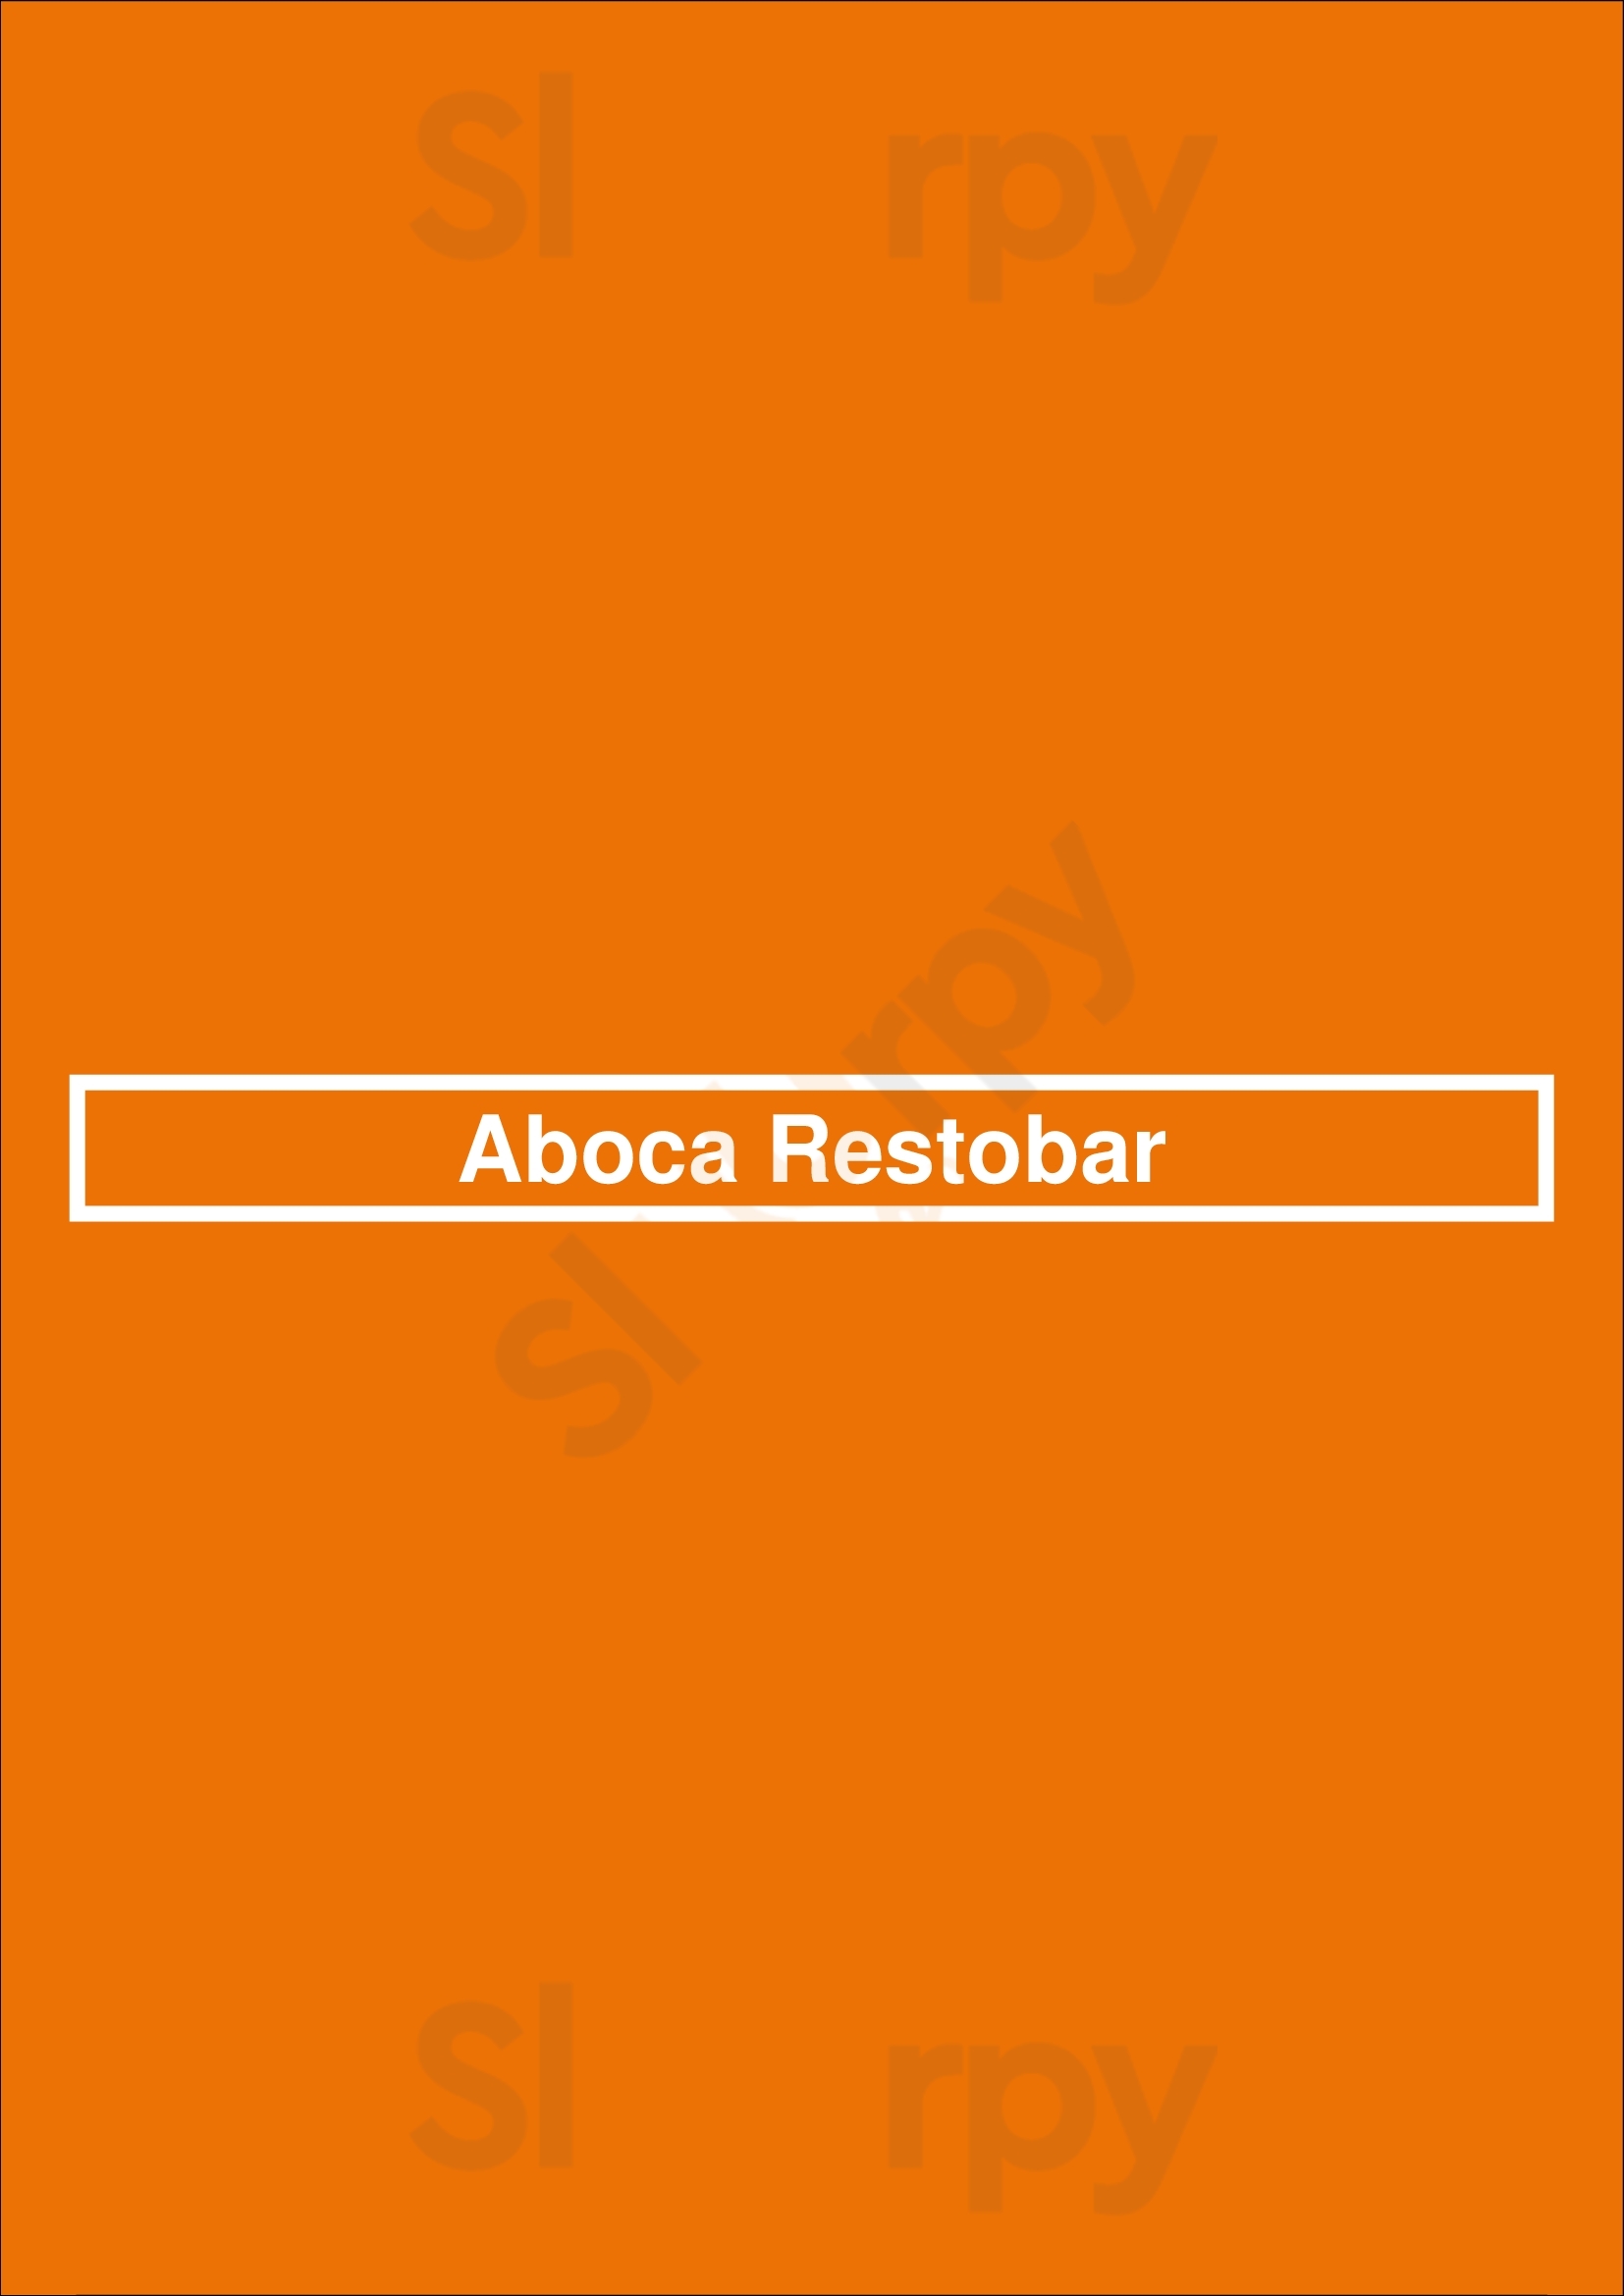 Aboca Restobar Madrid Menu - 1